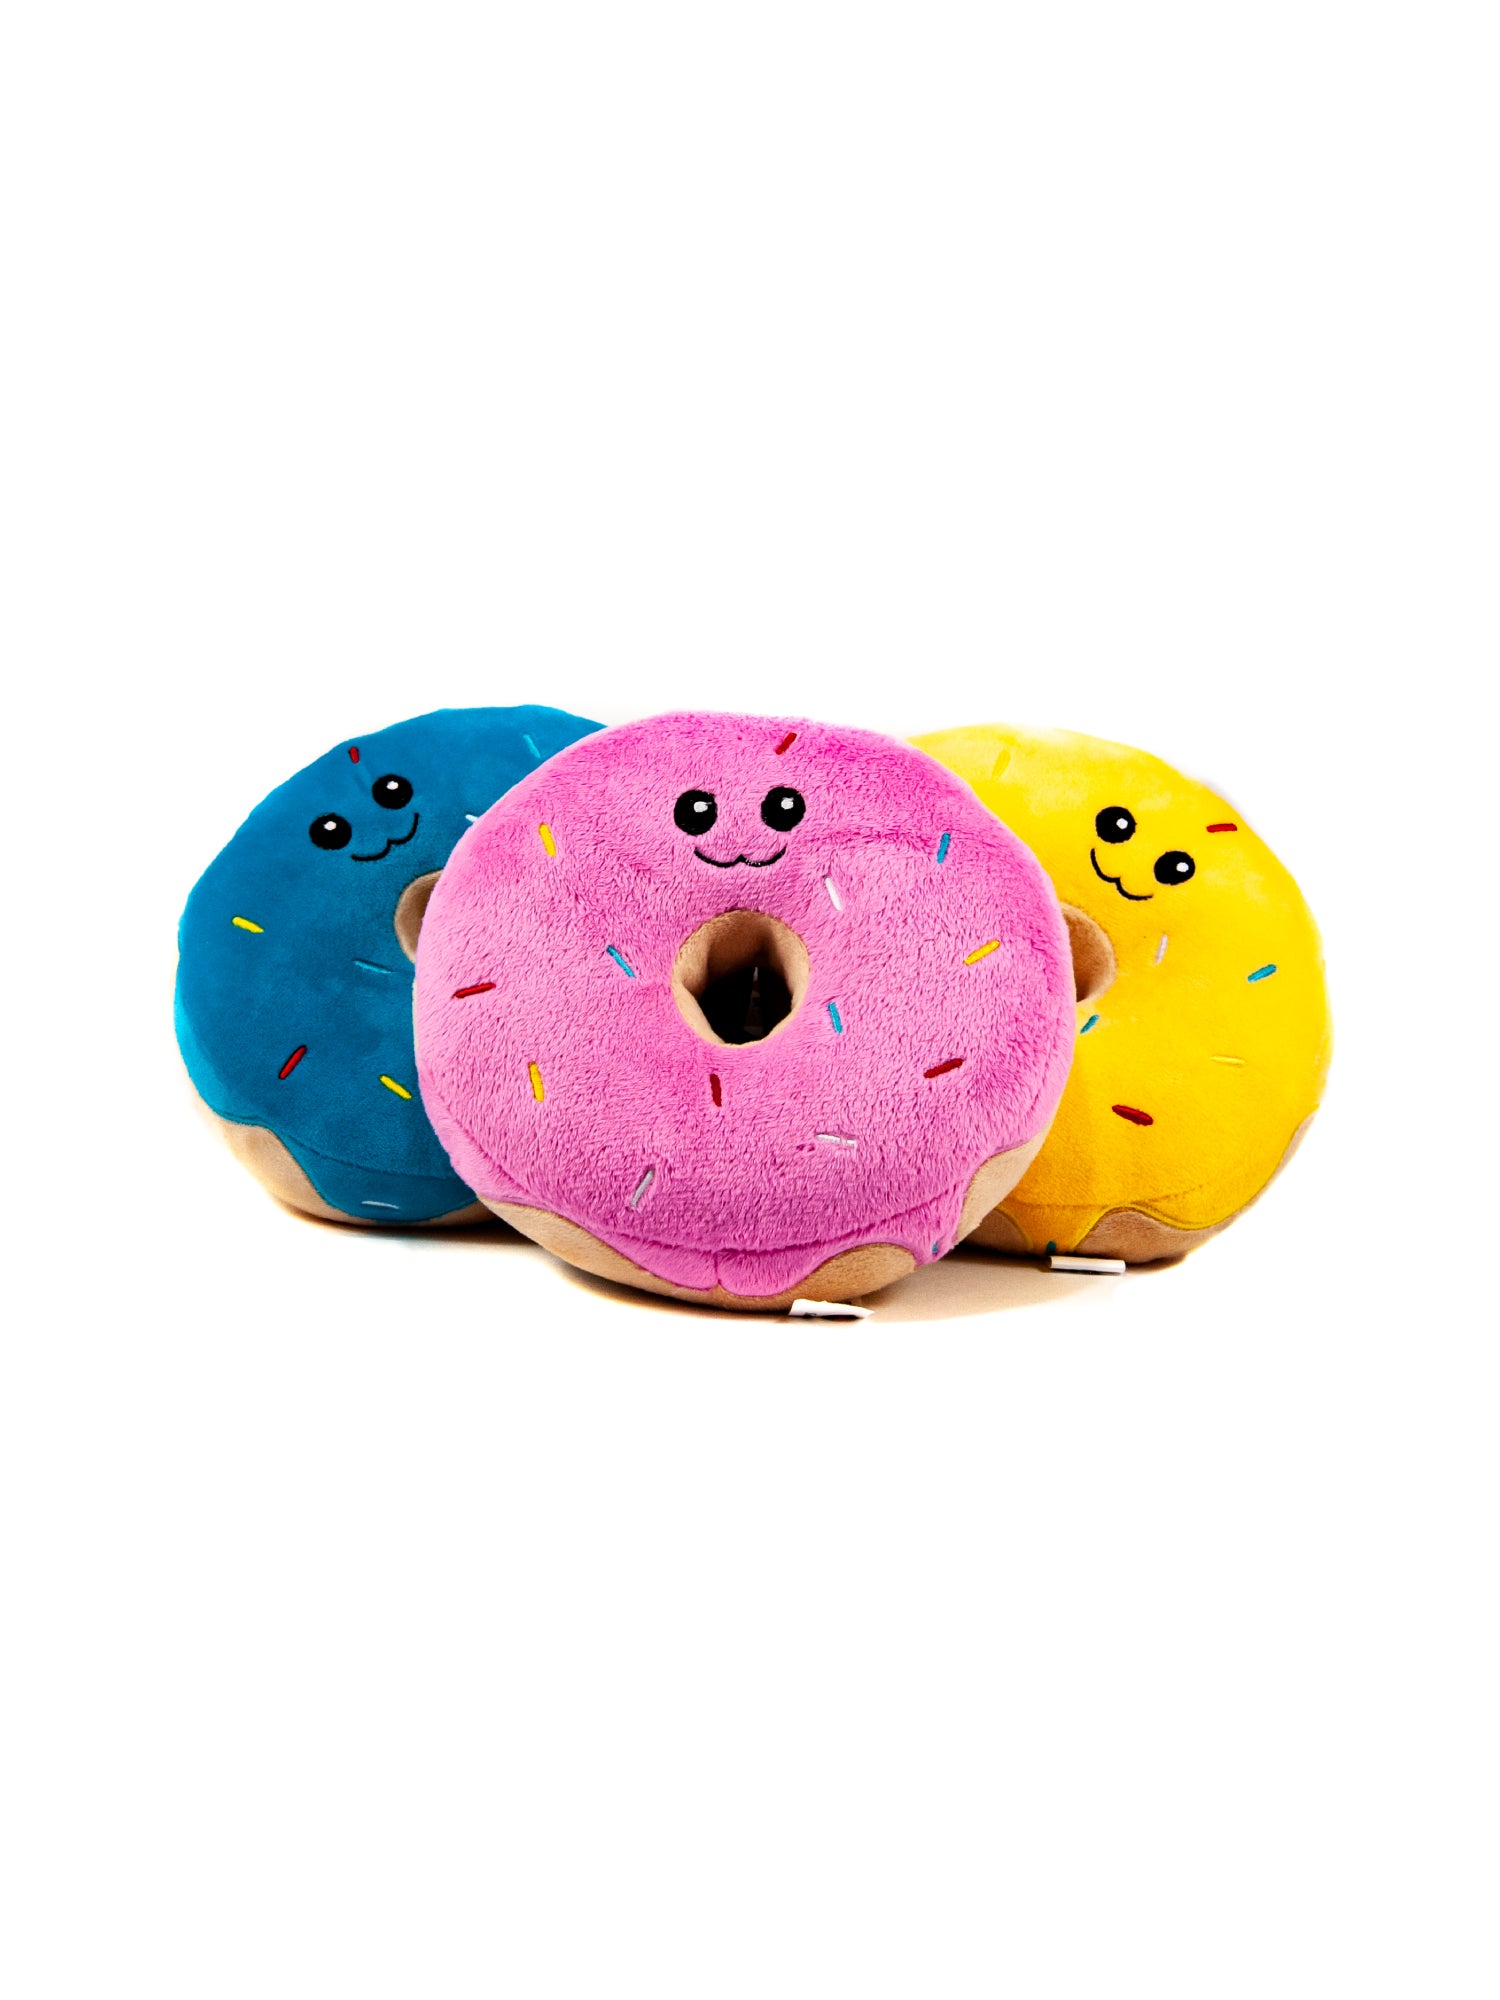 Kahoots large plush donuts, varies colors